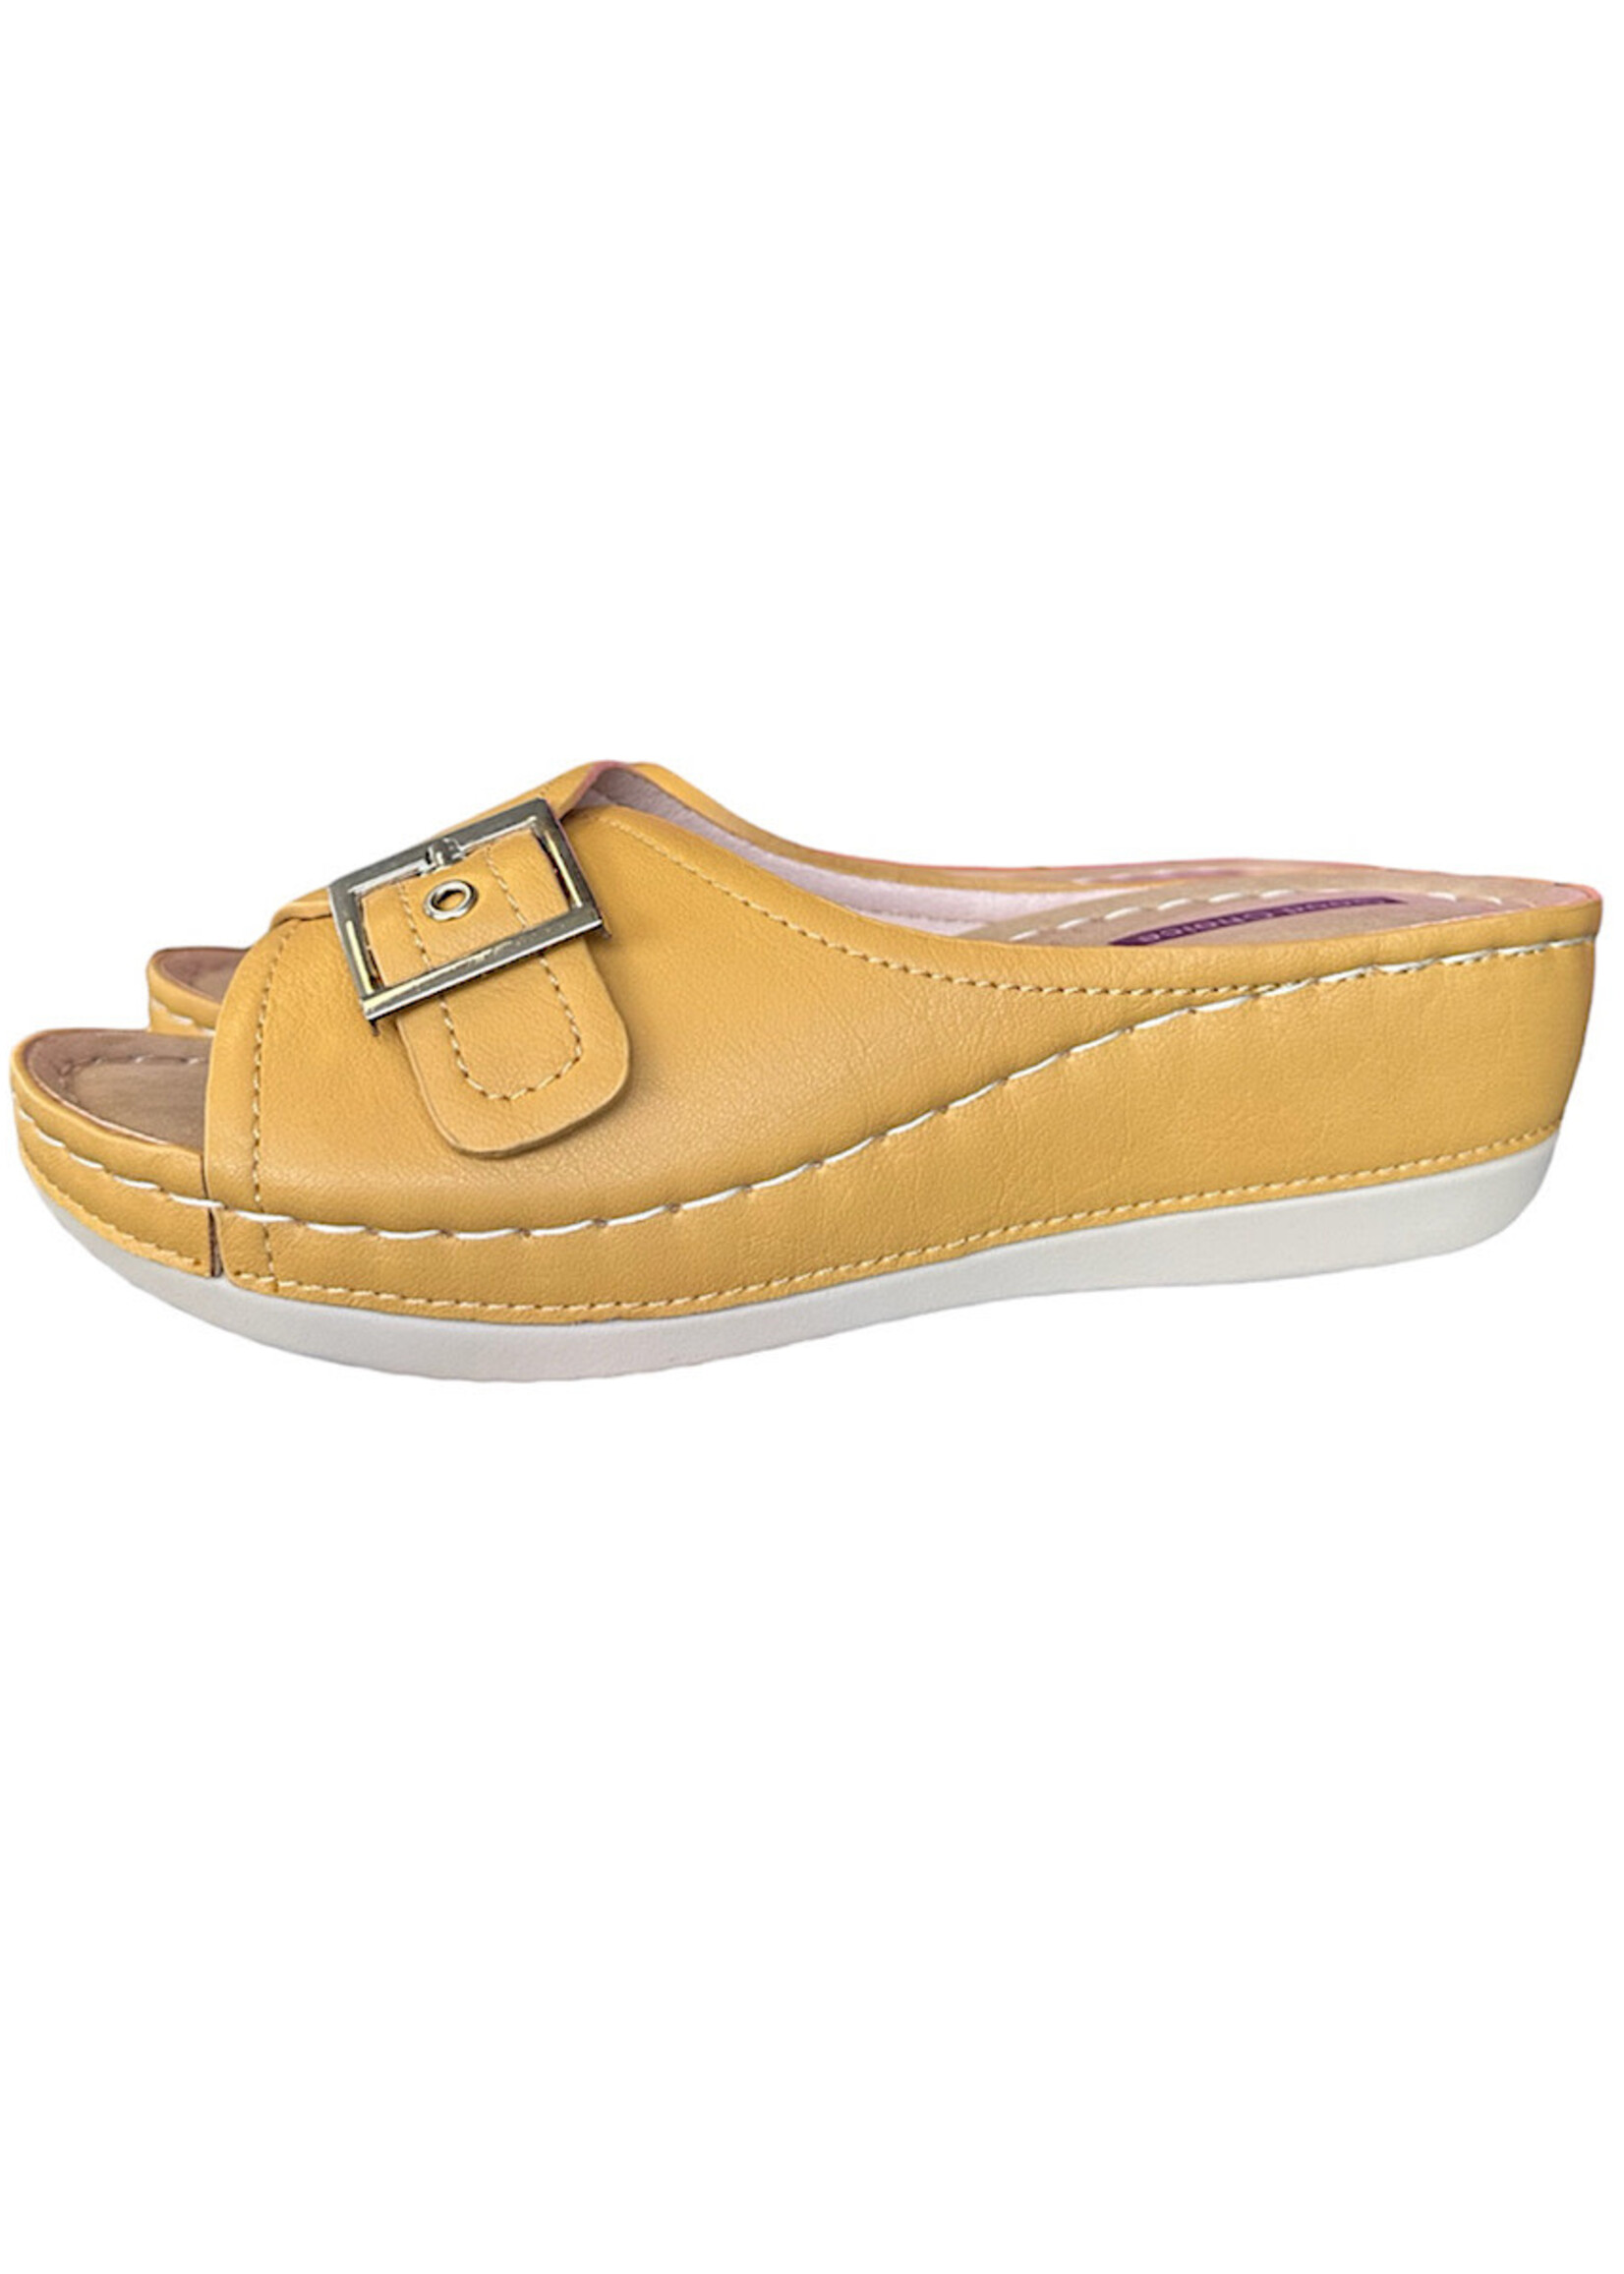 Good Choice Justina Yellow Sandals